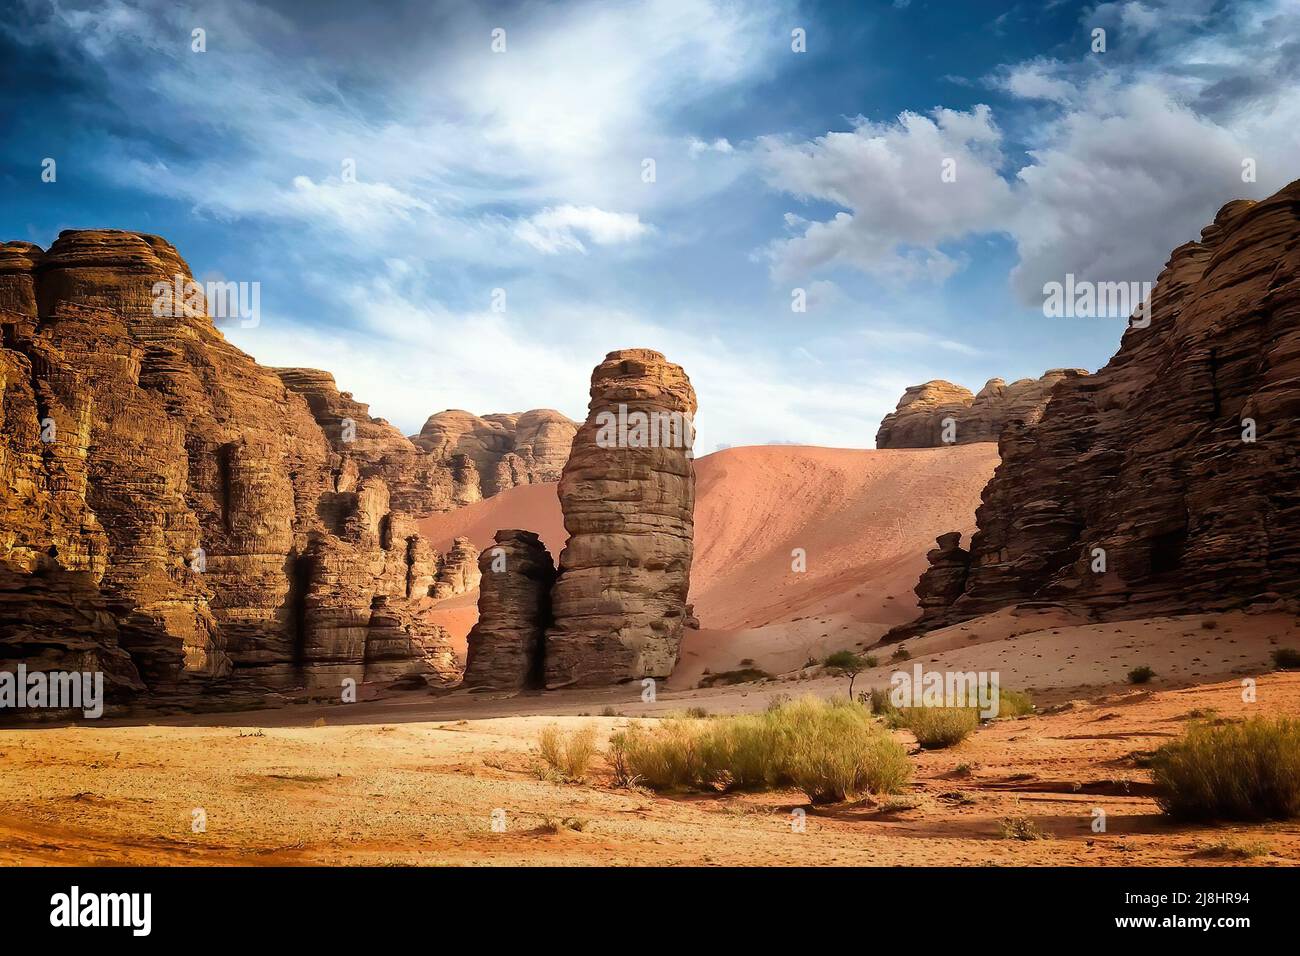 Journey through the Desert and Mountains. Al Ula, Saudi Arabia. Stock Photo